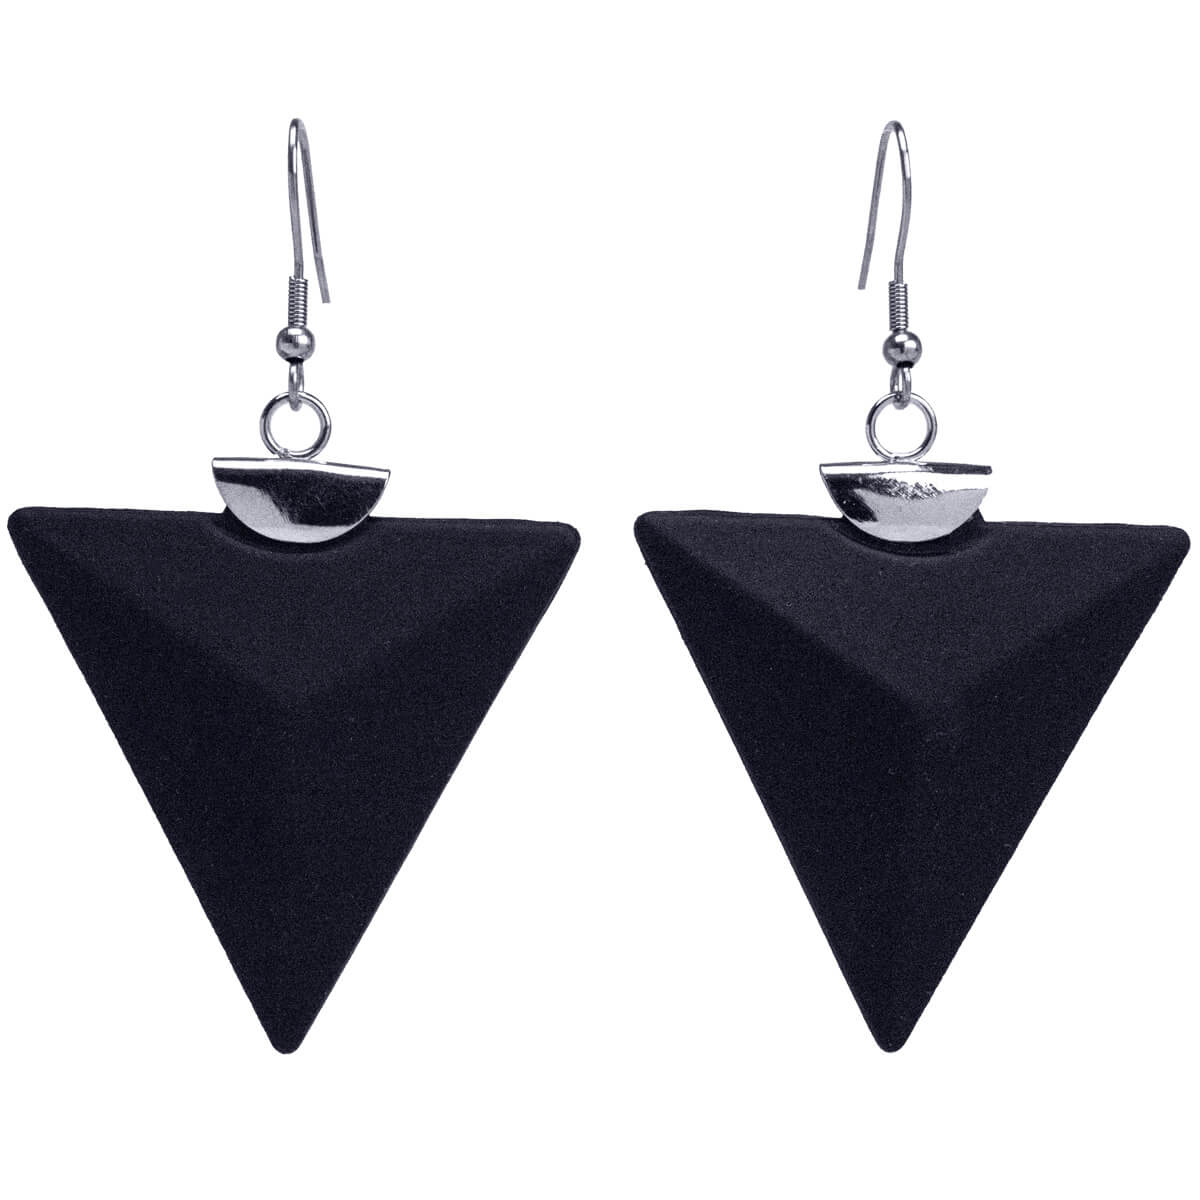 Triangle flat hanging earrings